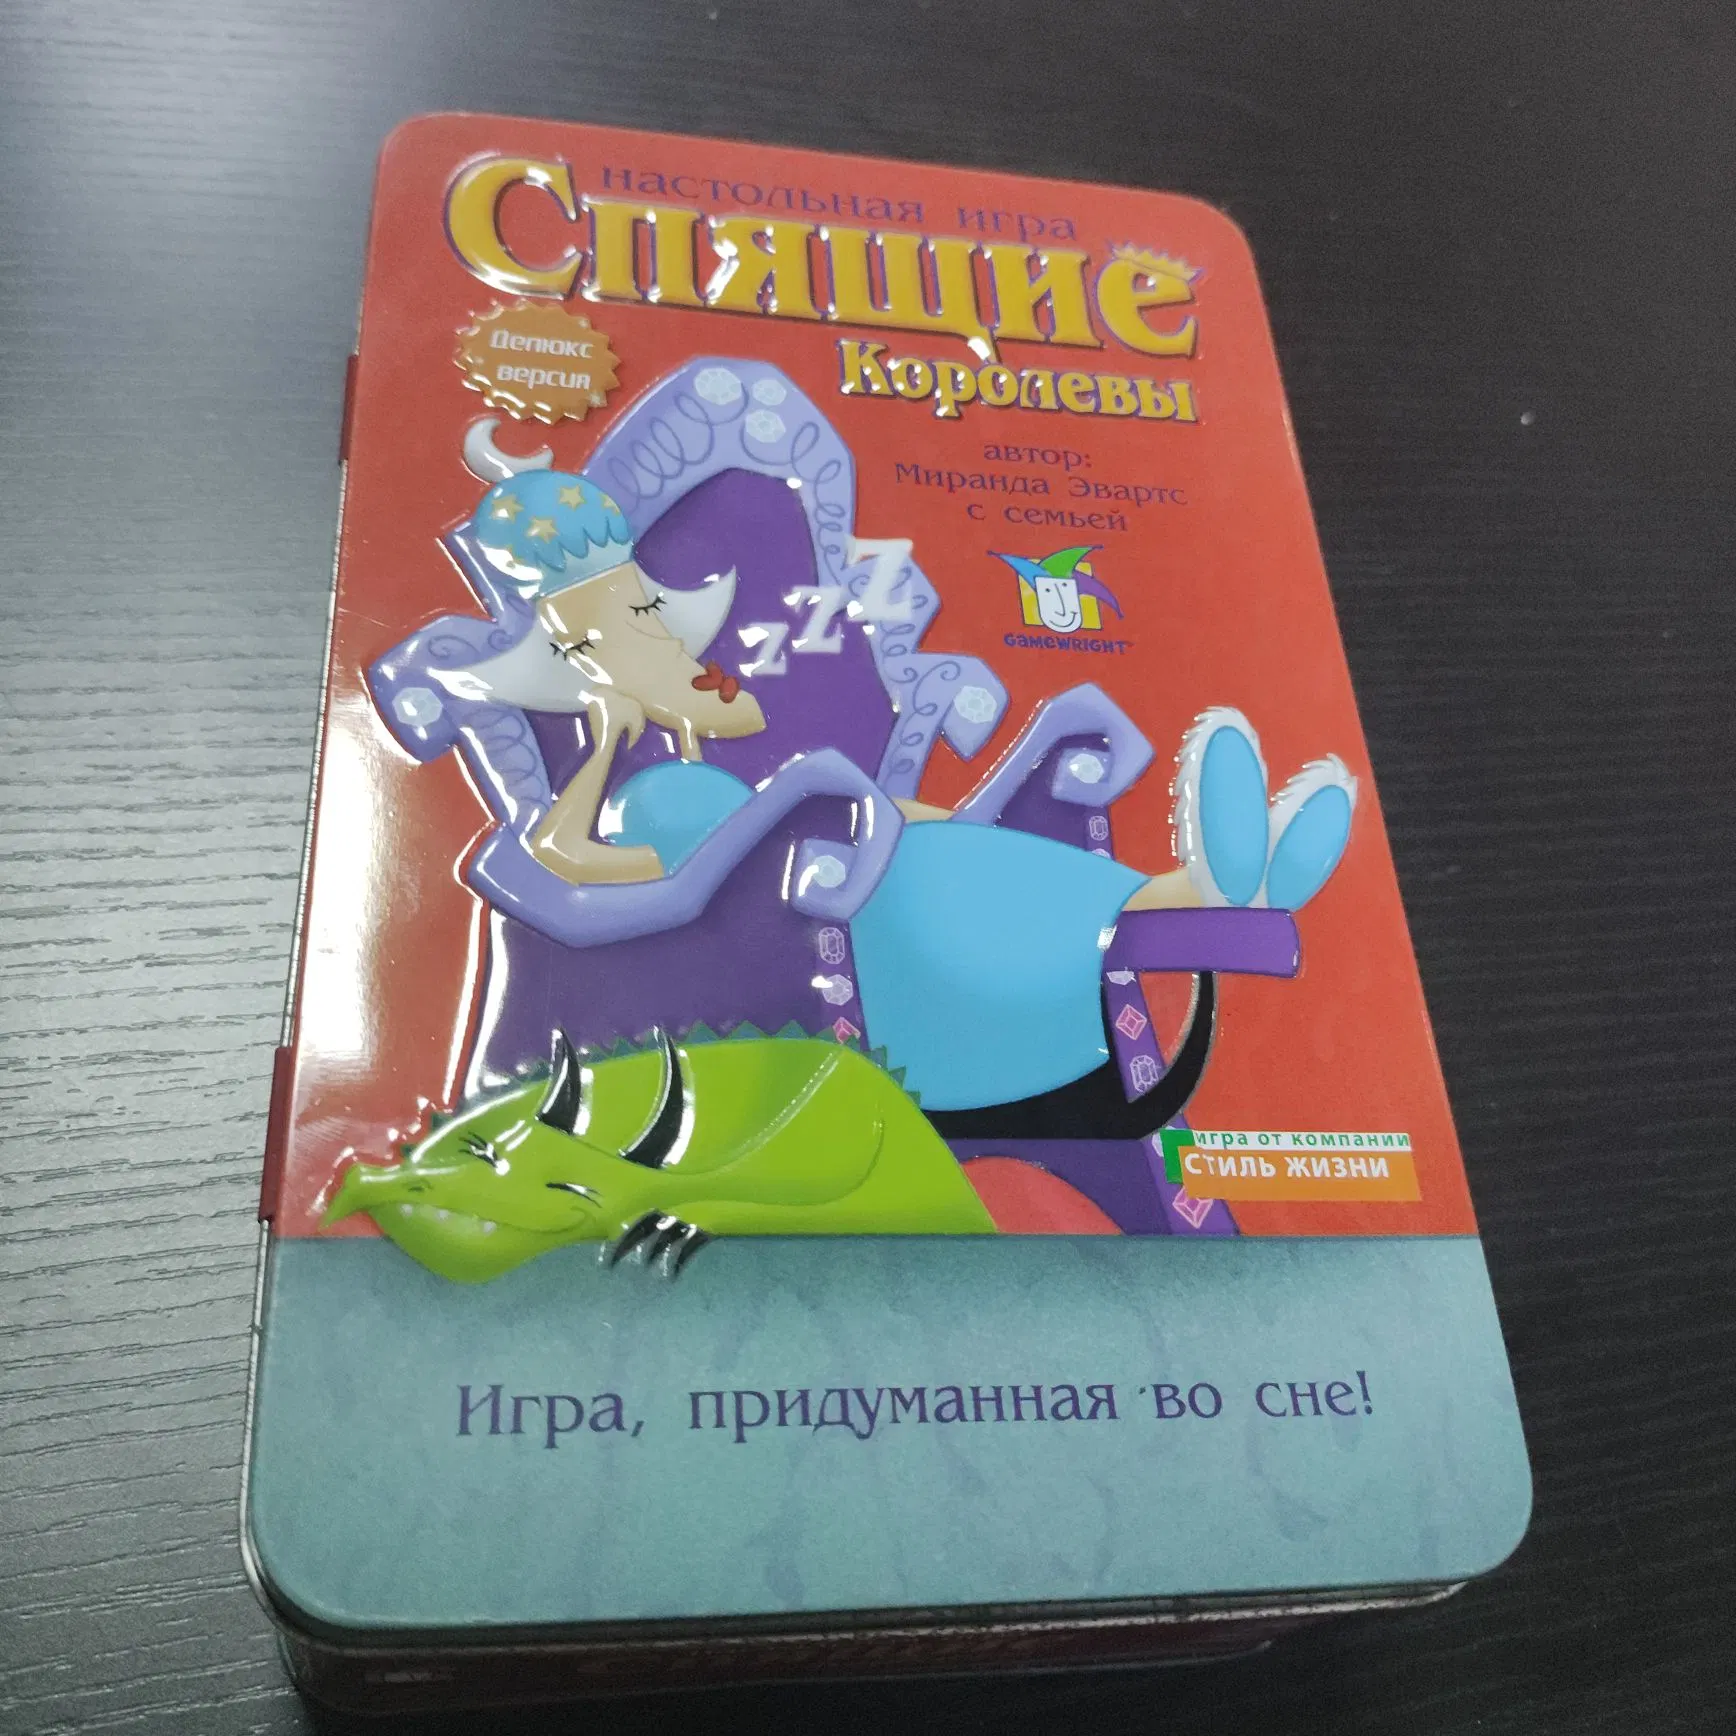 Customized Cartoon Character Cover Rectangular Iron Box Packaging